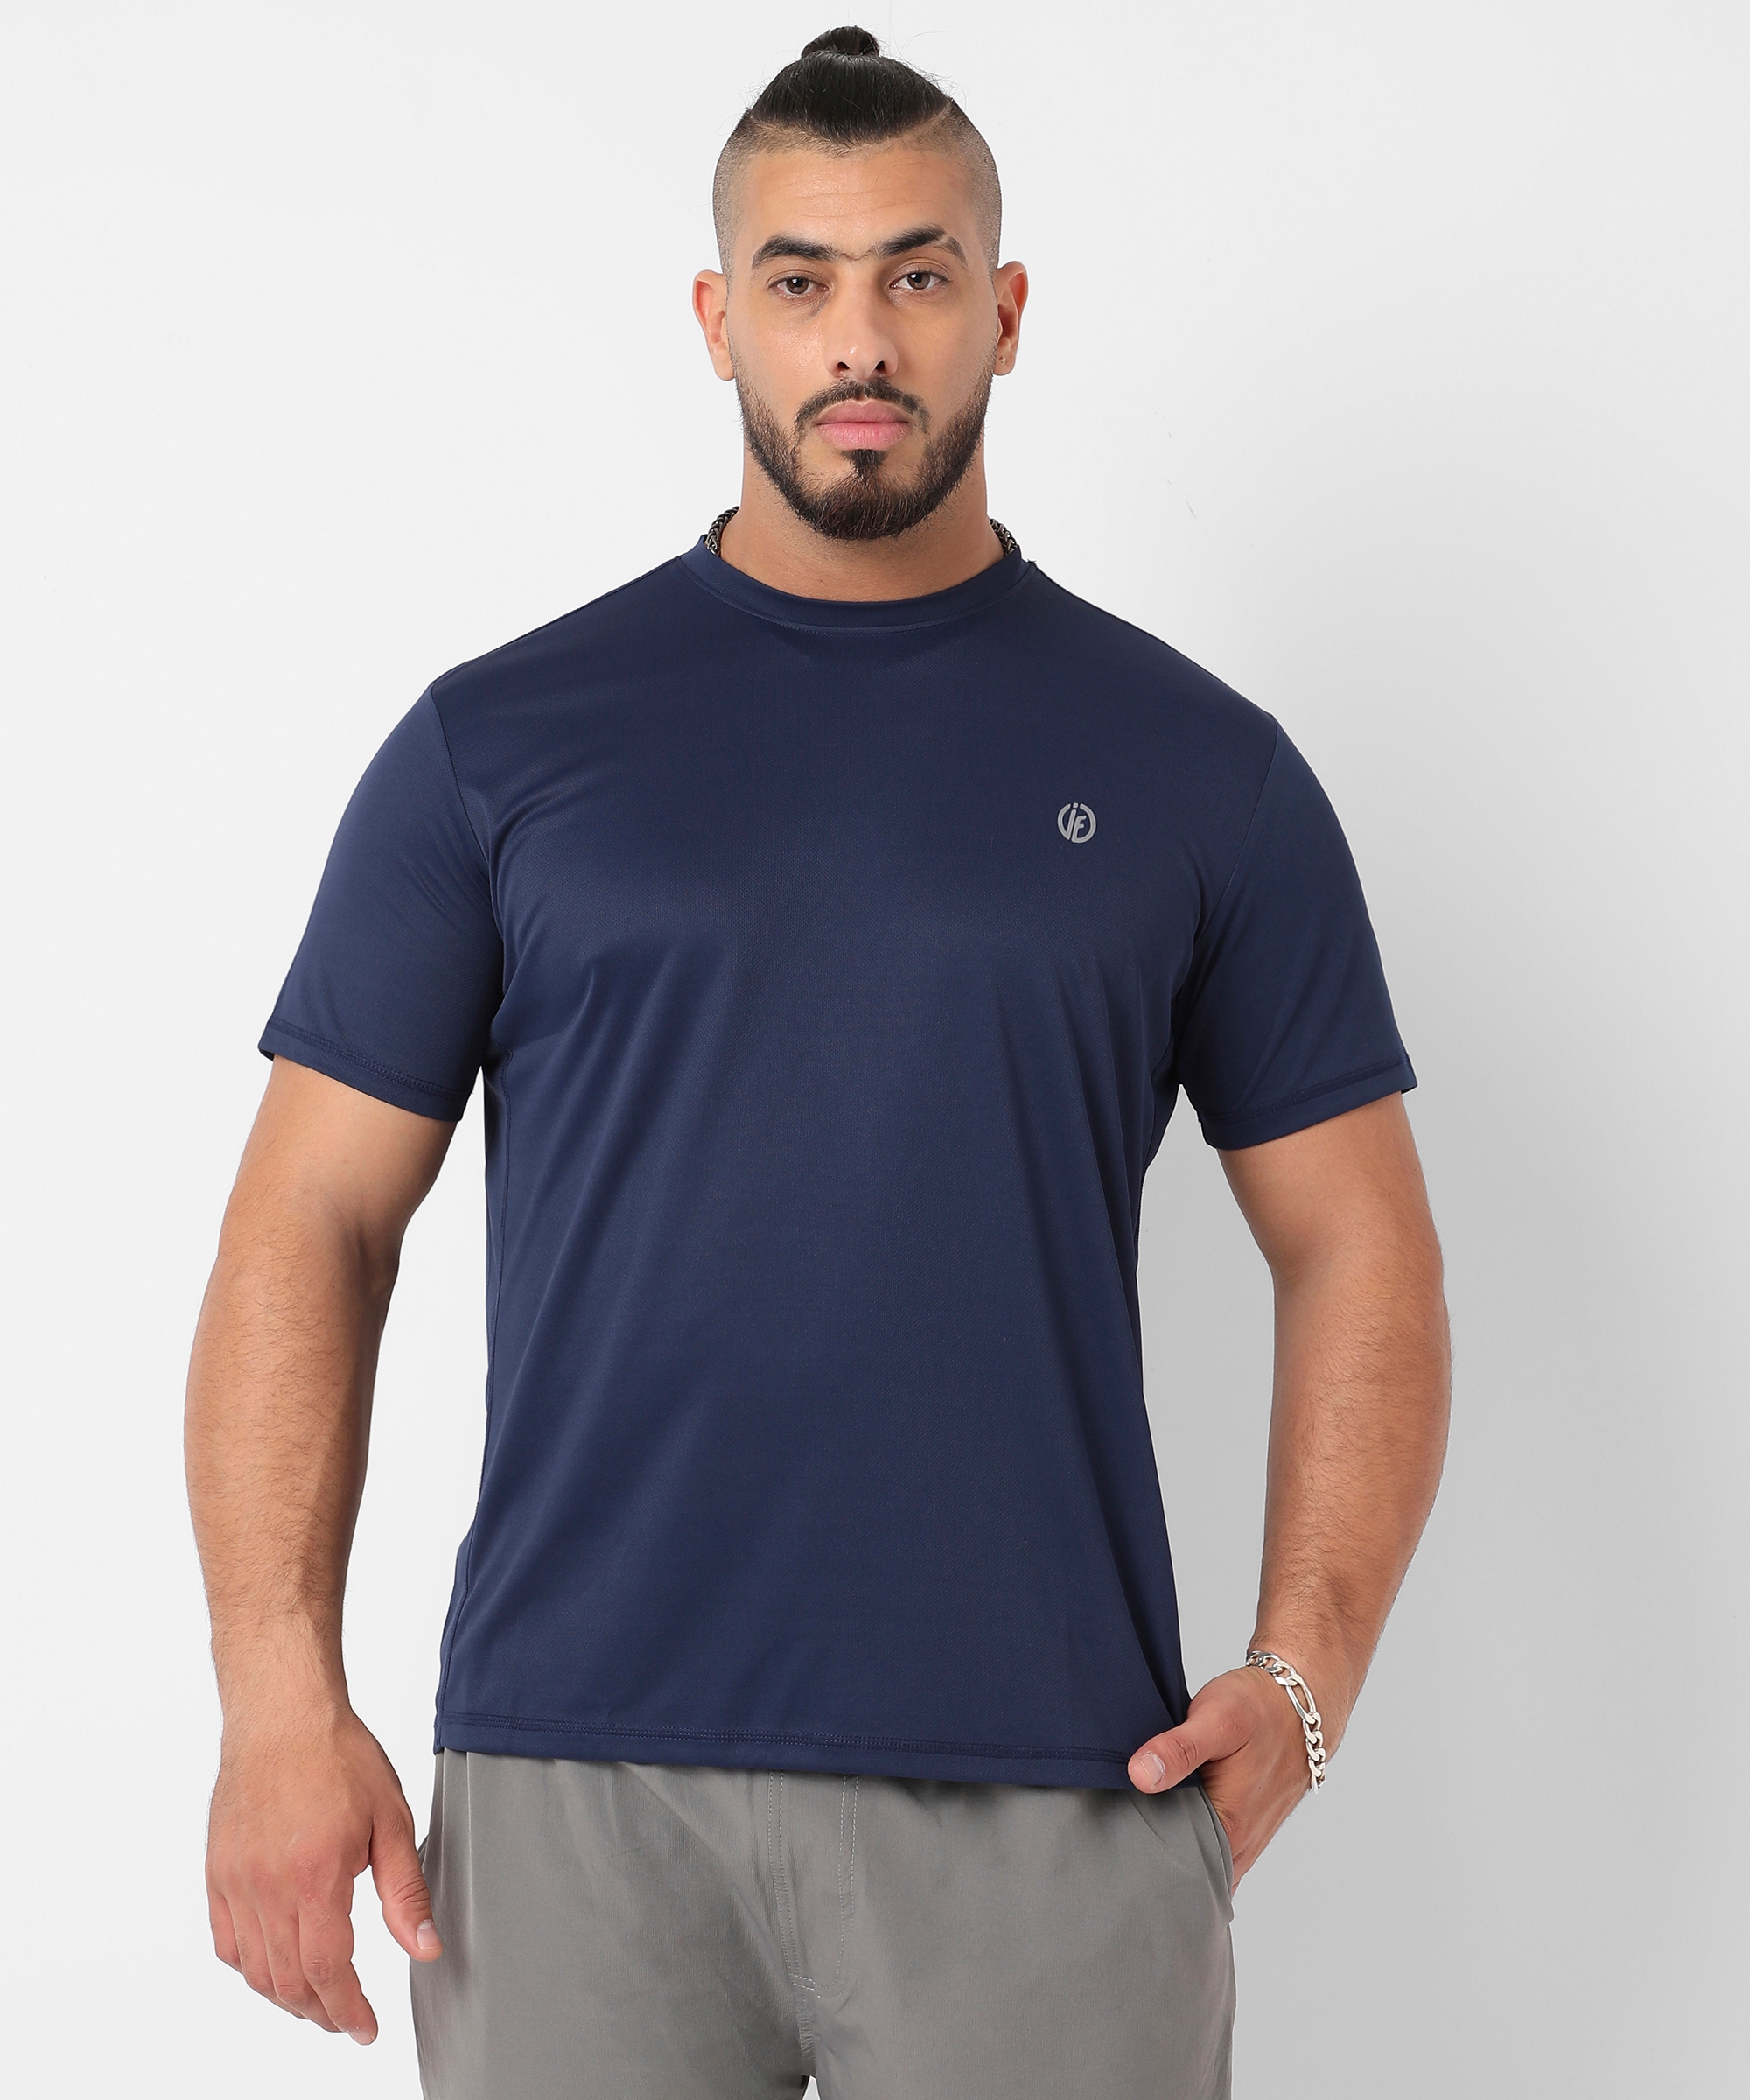 Instafab Plus | Men's Navy Blue Basic Activewear T-Shirt